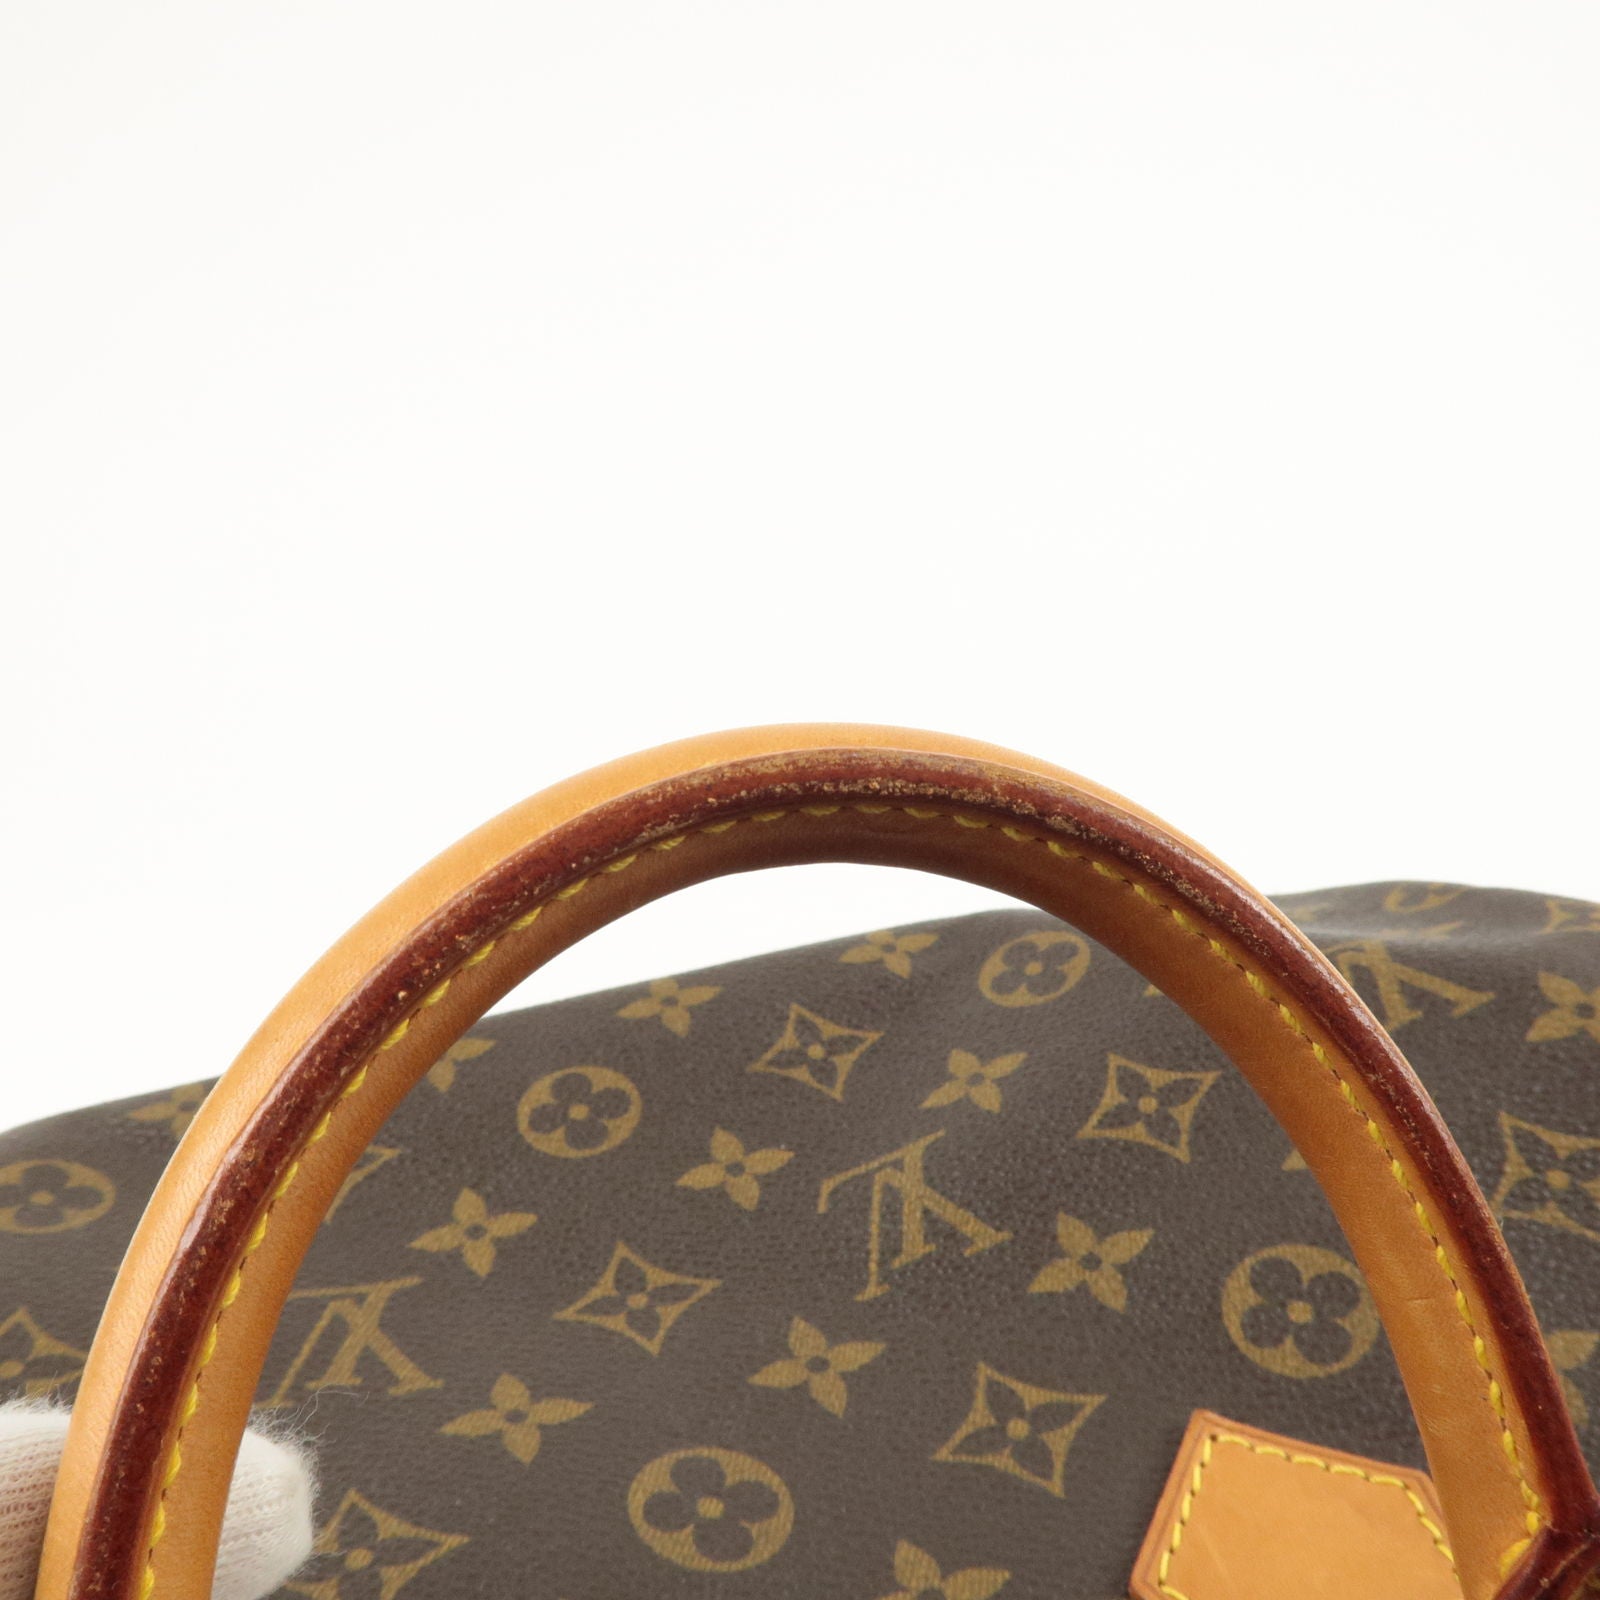 Louis Vuitton 2009 Pre-owned Monogram Graffiti Speedy 30 Handbag - Brown